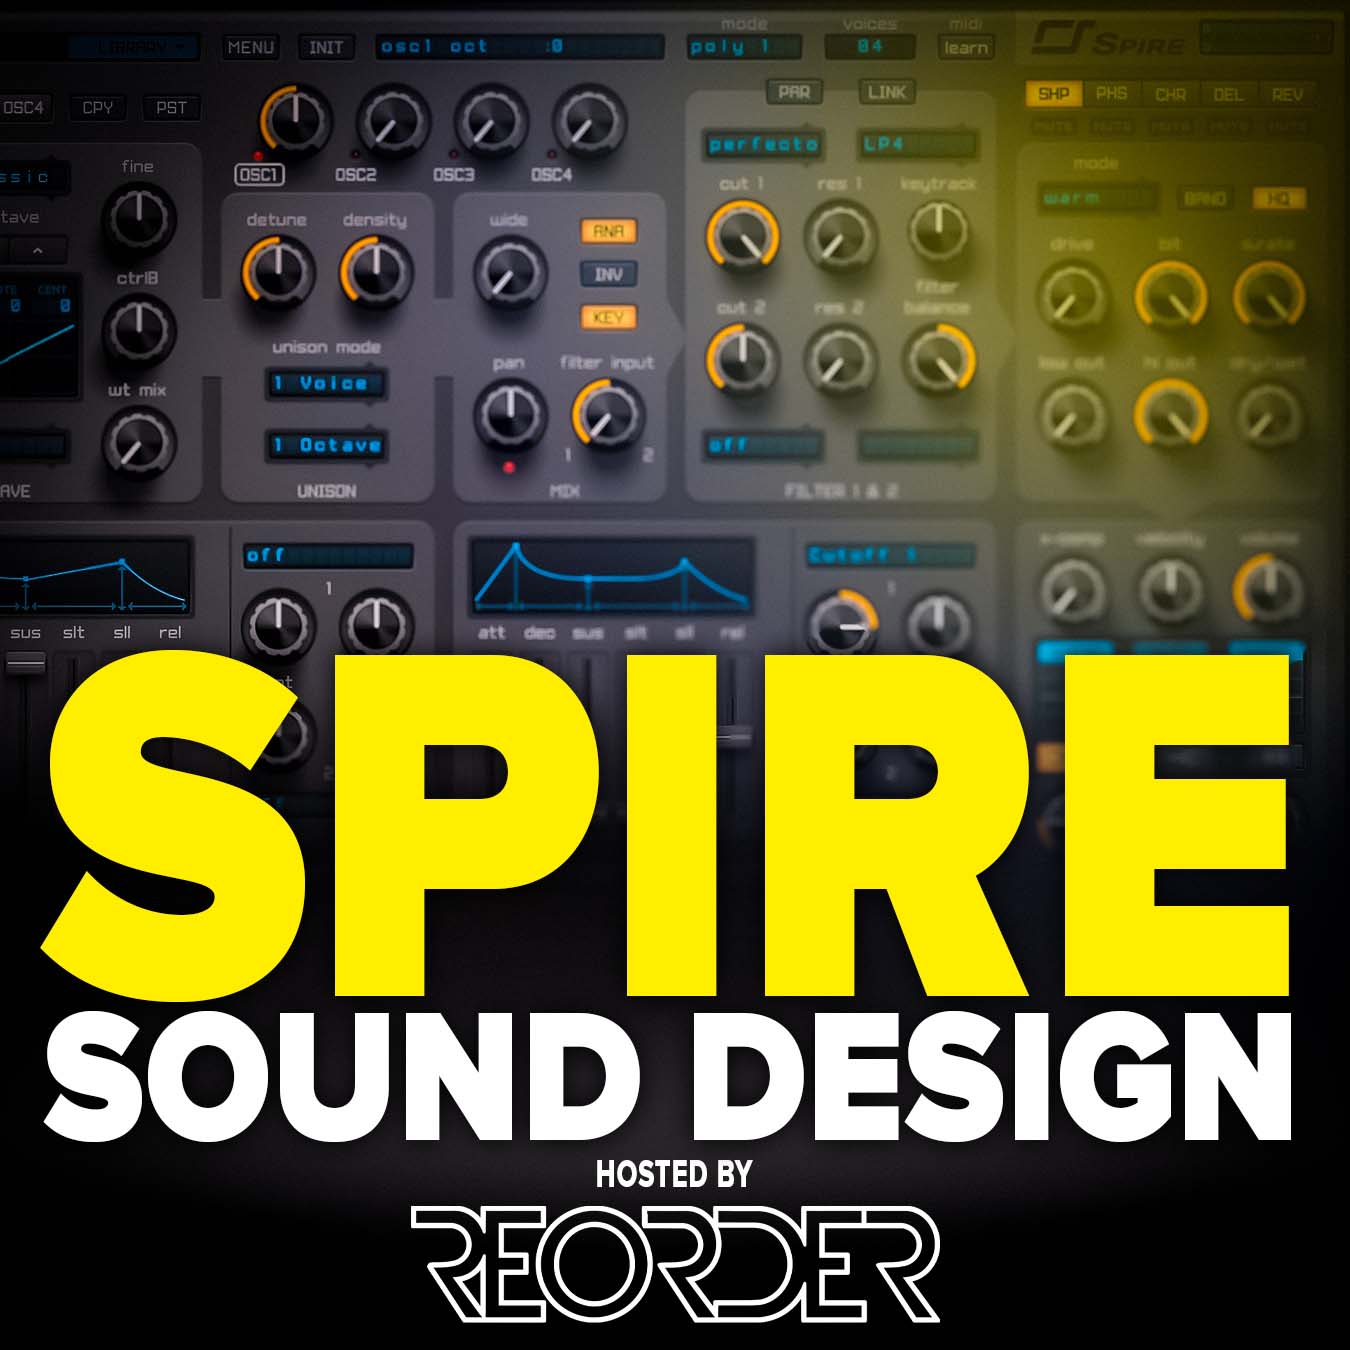 how to use spire plugin, spire sound design, spire presets, spire tutorial, masterclass with reorder